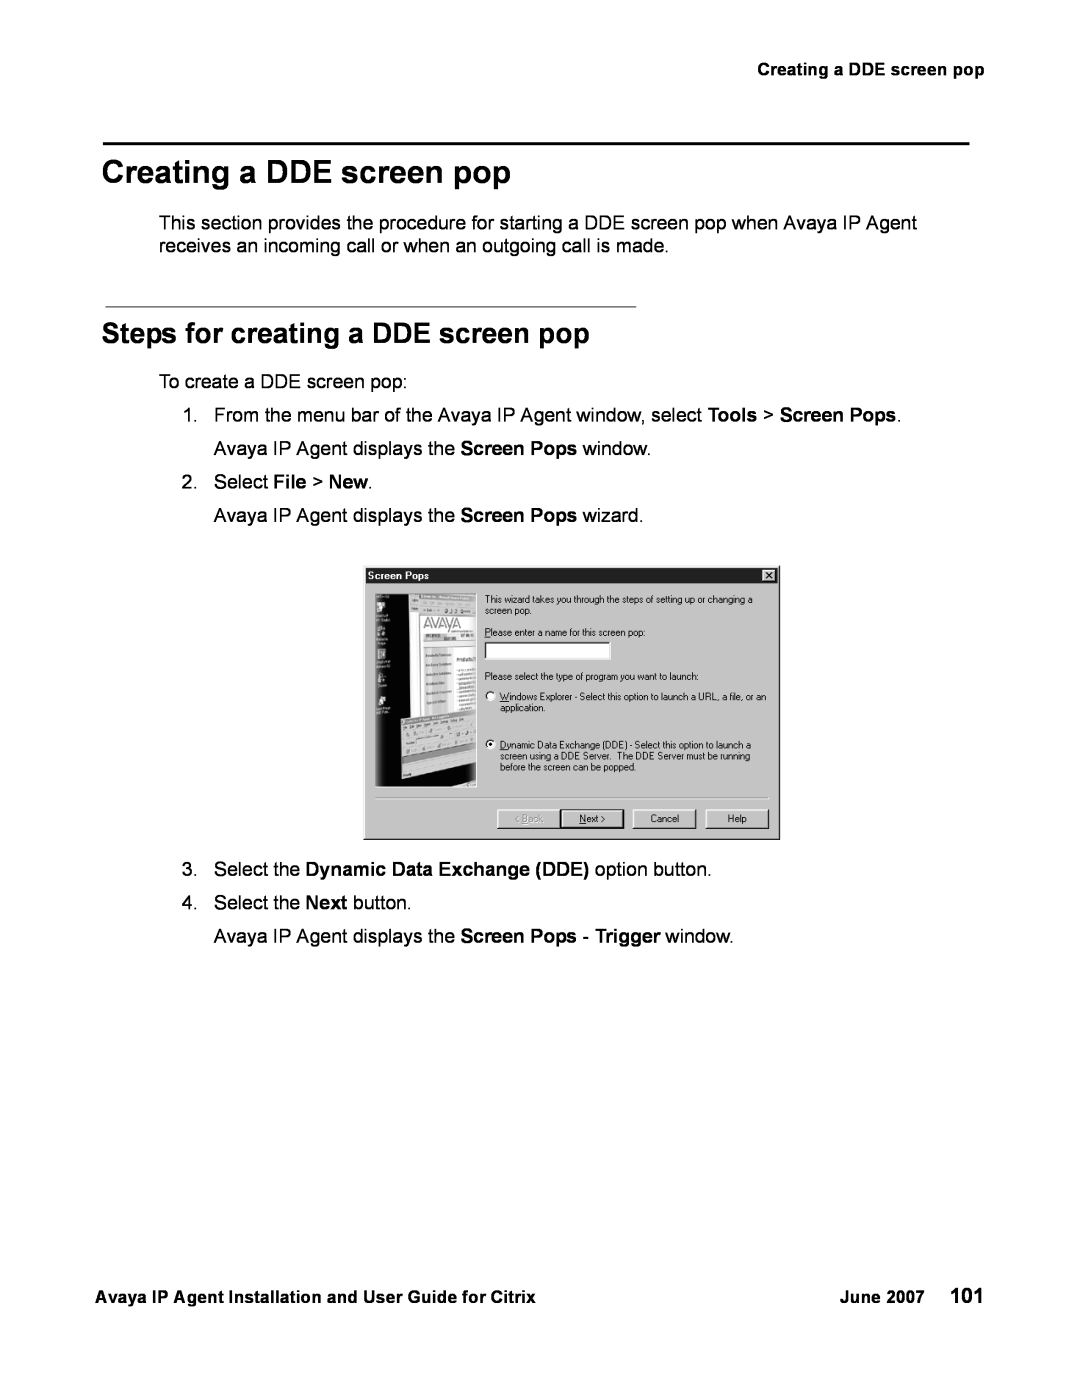 Avaya 7 manual Creating a DDE screen pop, Steps for creating a DDE screen pop 